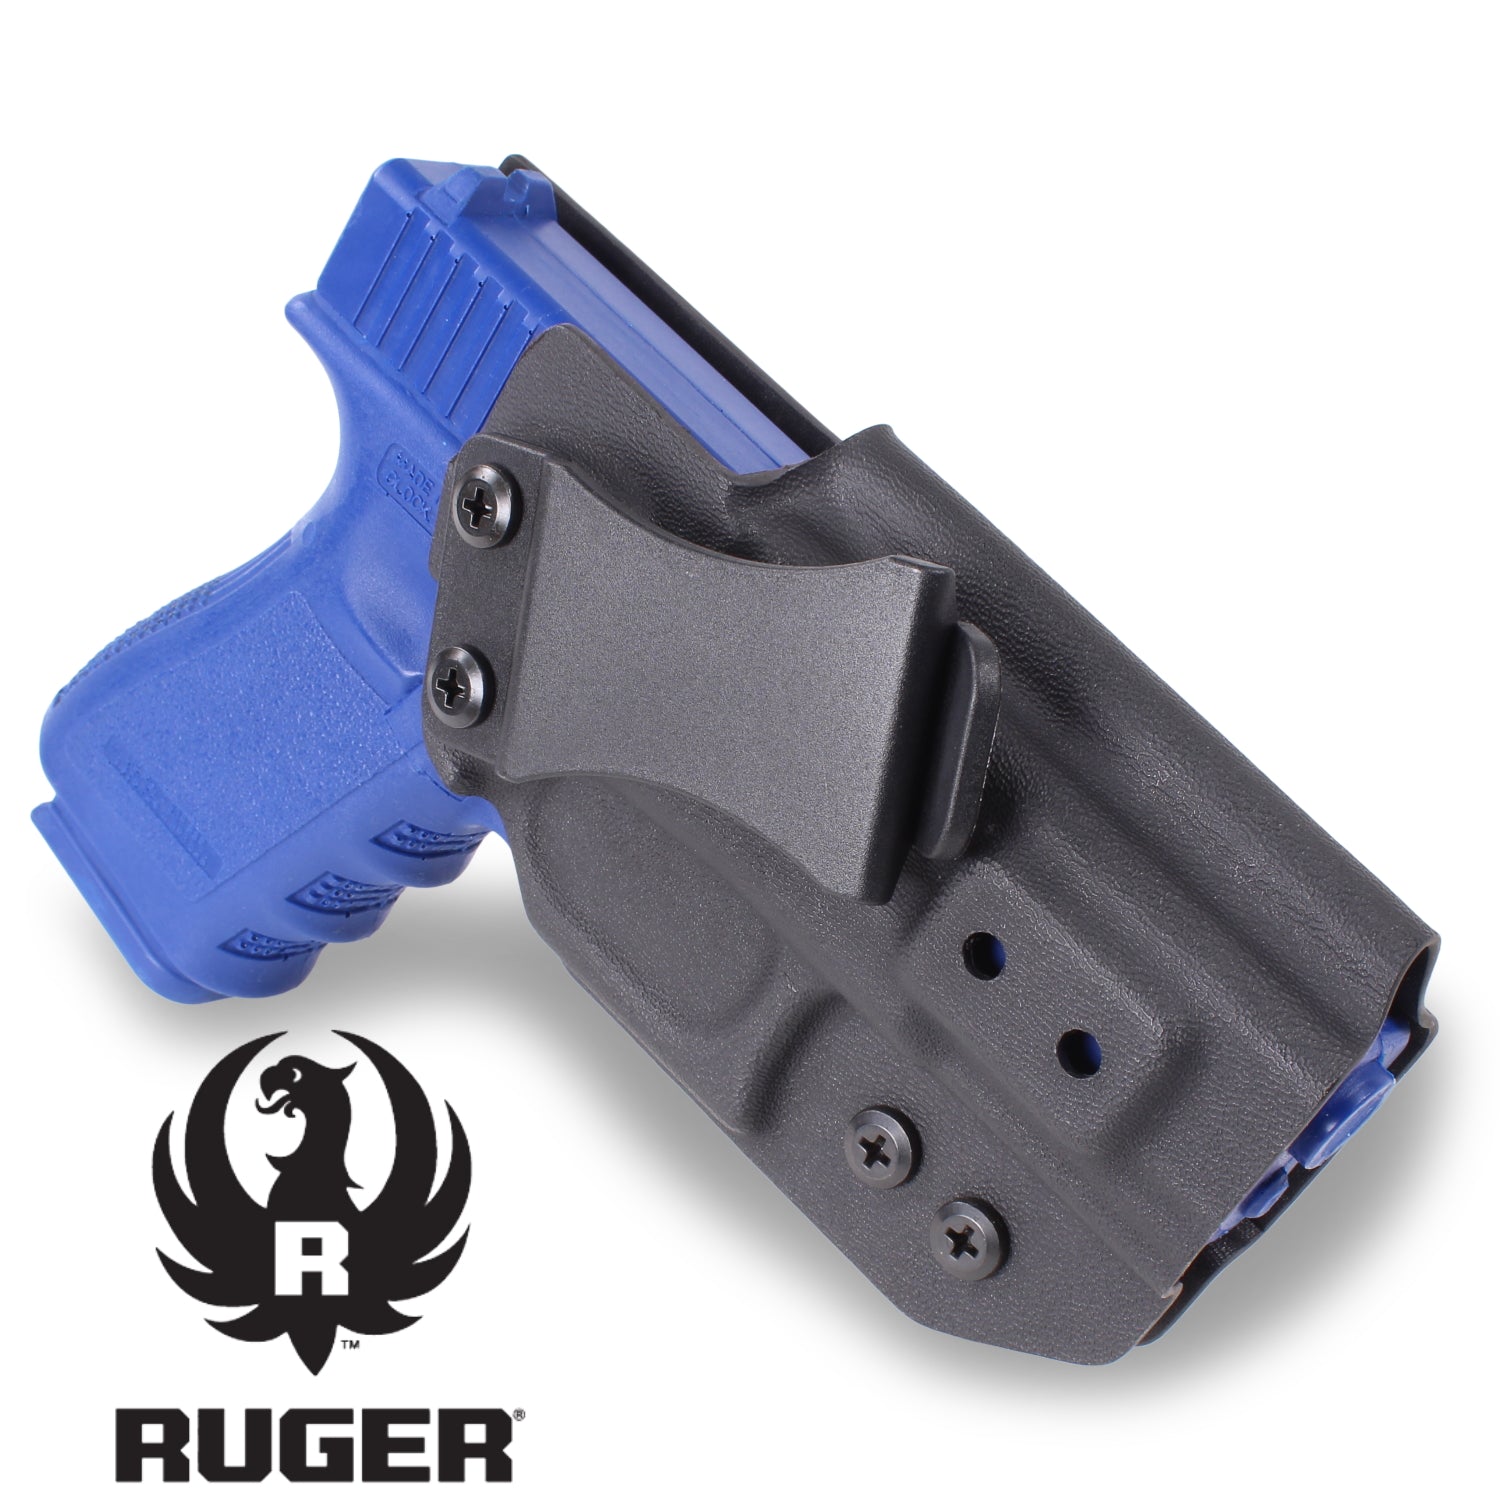 RUGER - IWB KYDEX Gun Holster - Concealed Carry Tuckable Multiple Adjustable Belt Clips - 100% US Made - Inside Waistband